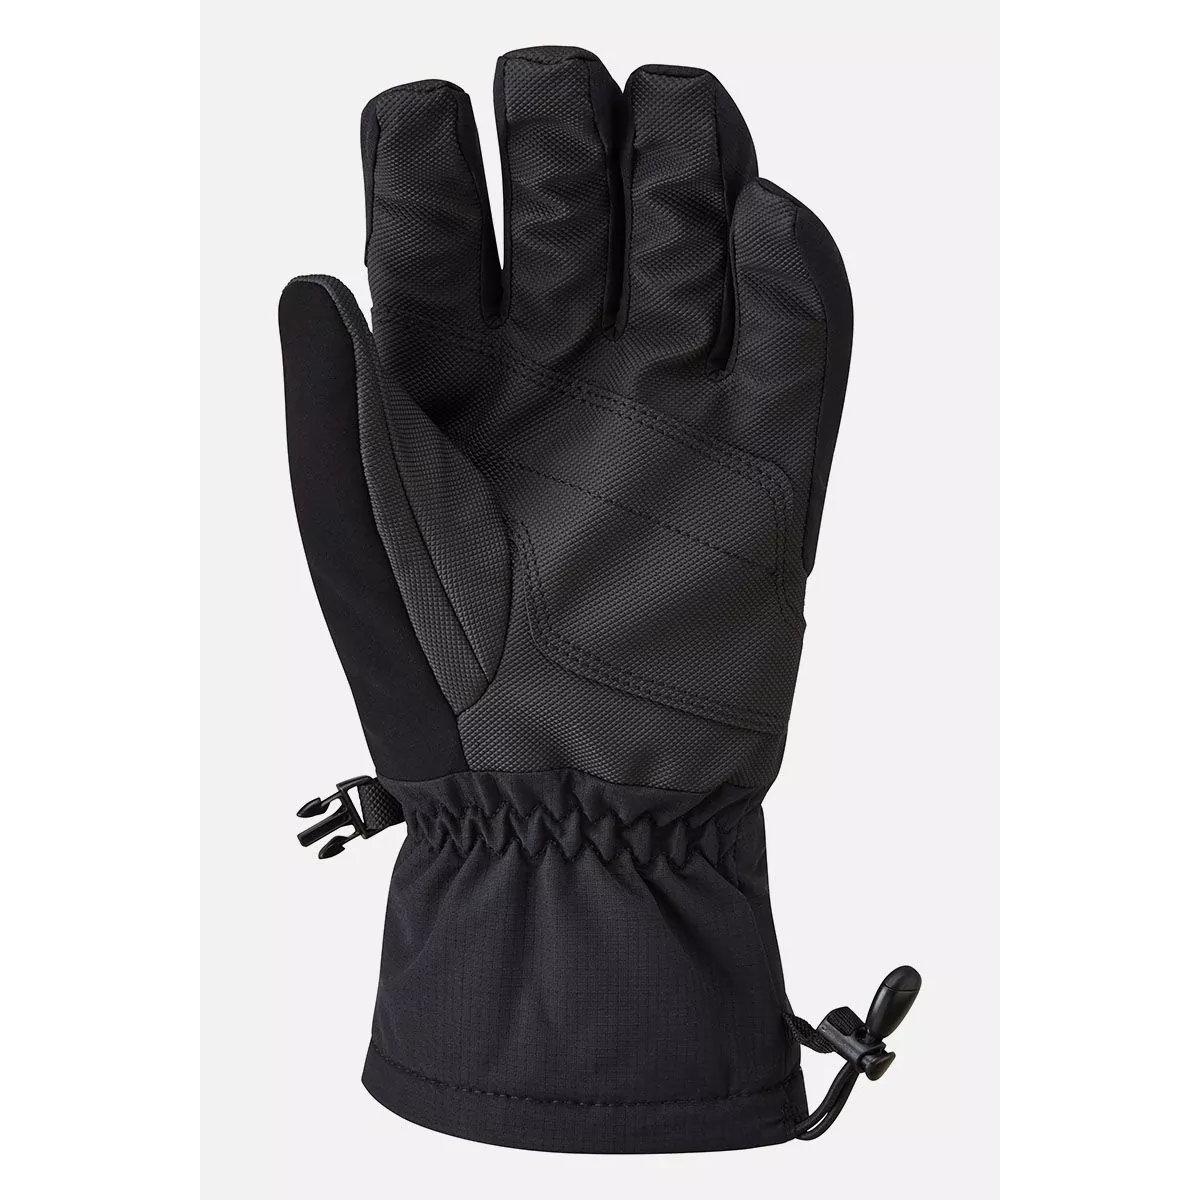 Rab Women's Storm Glove - Black